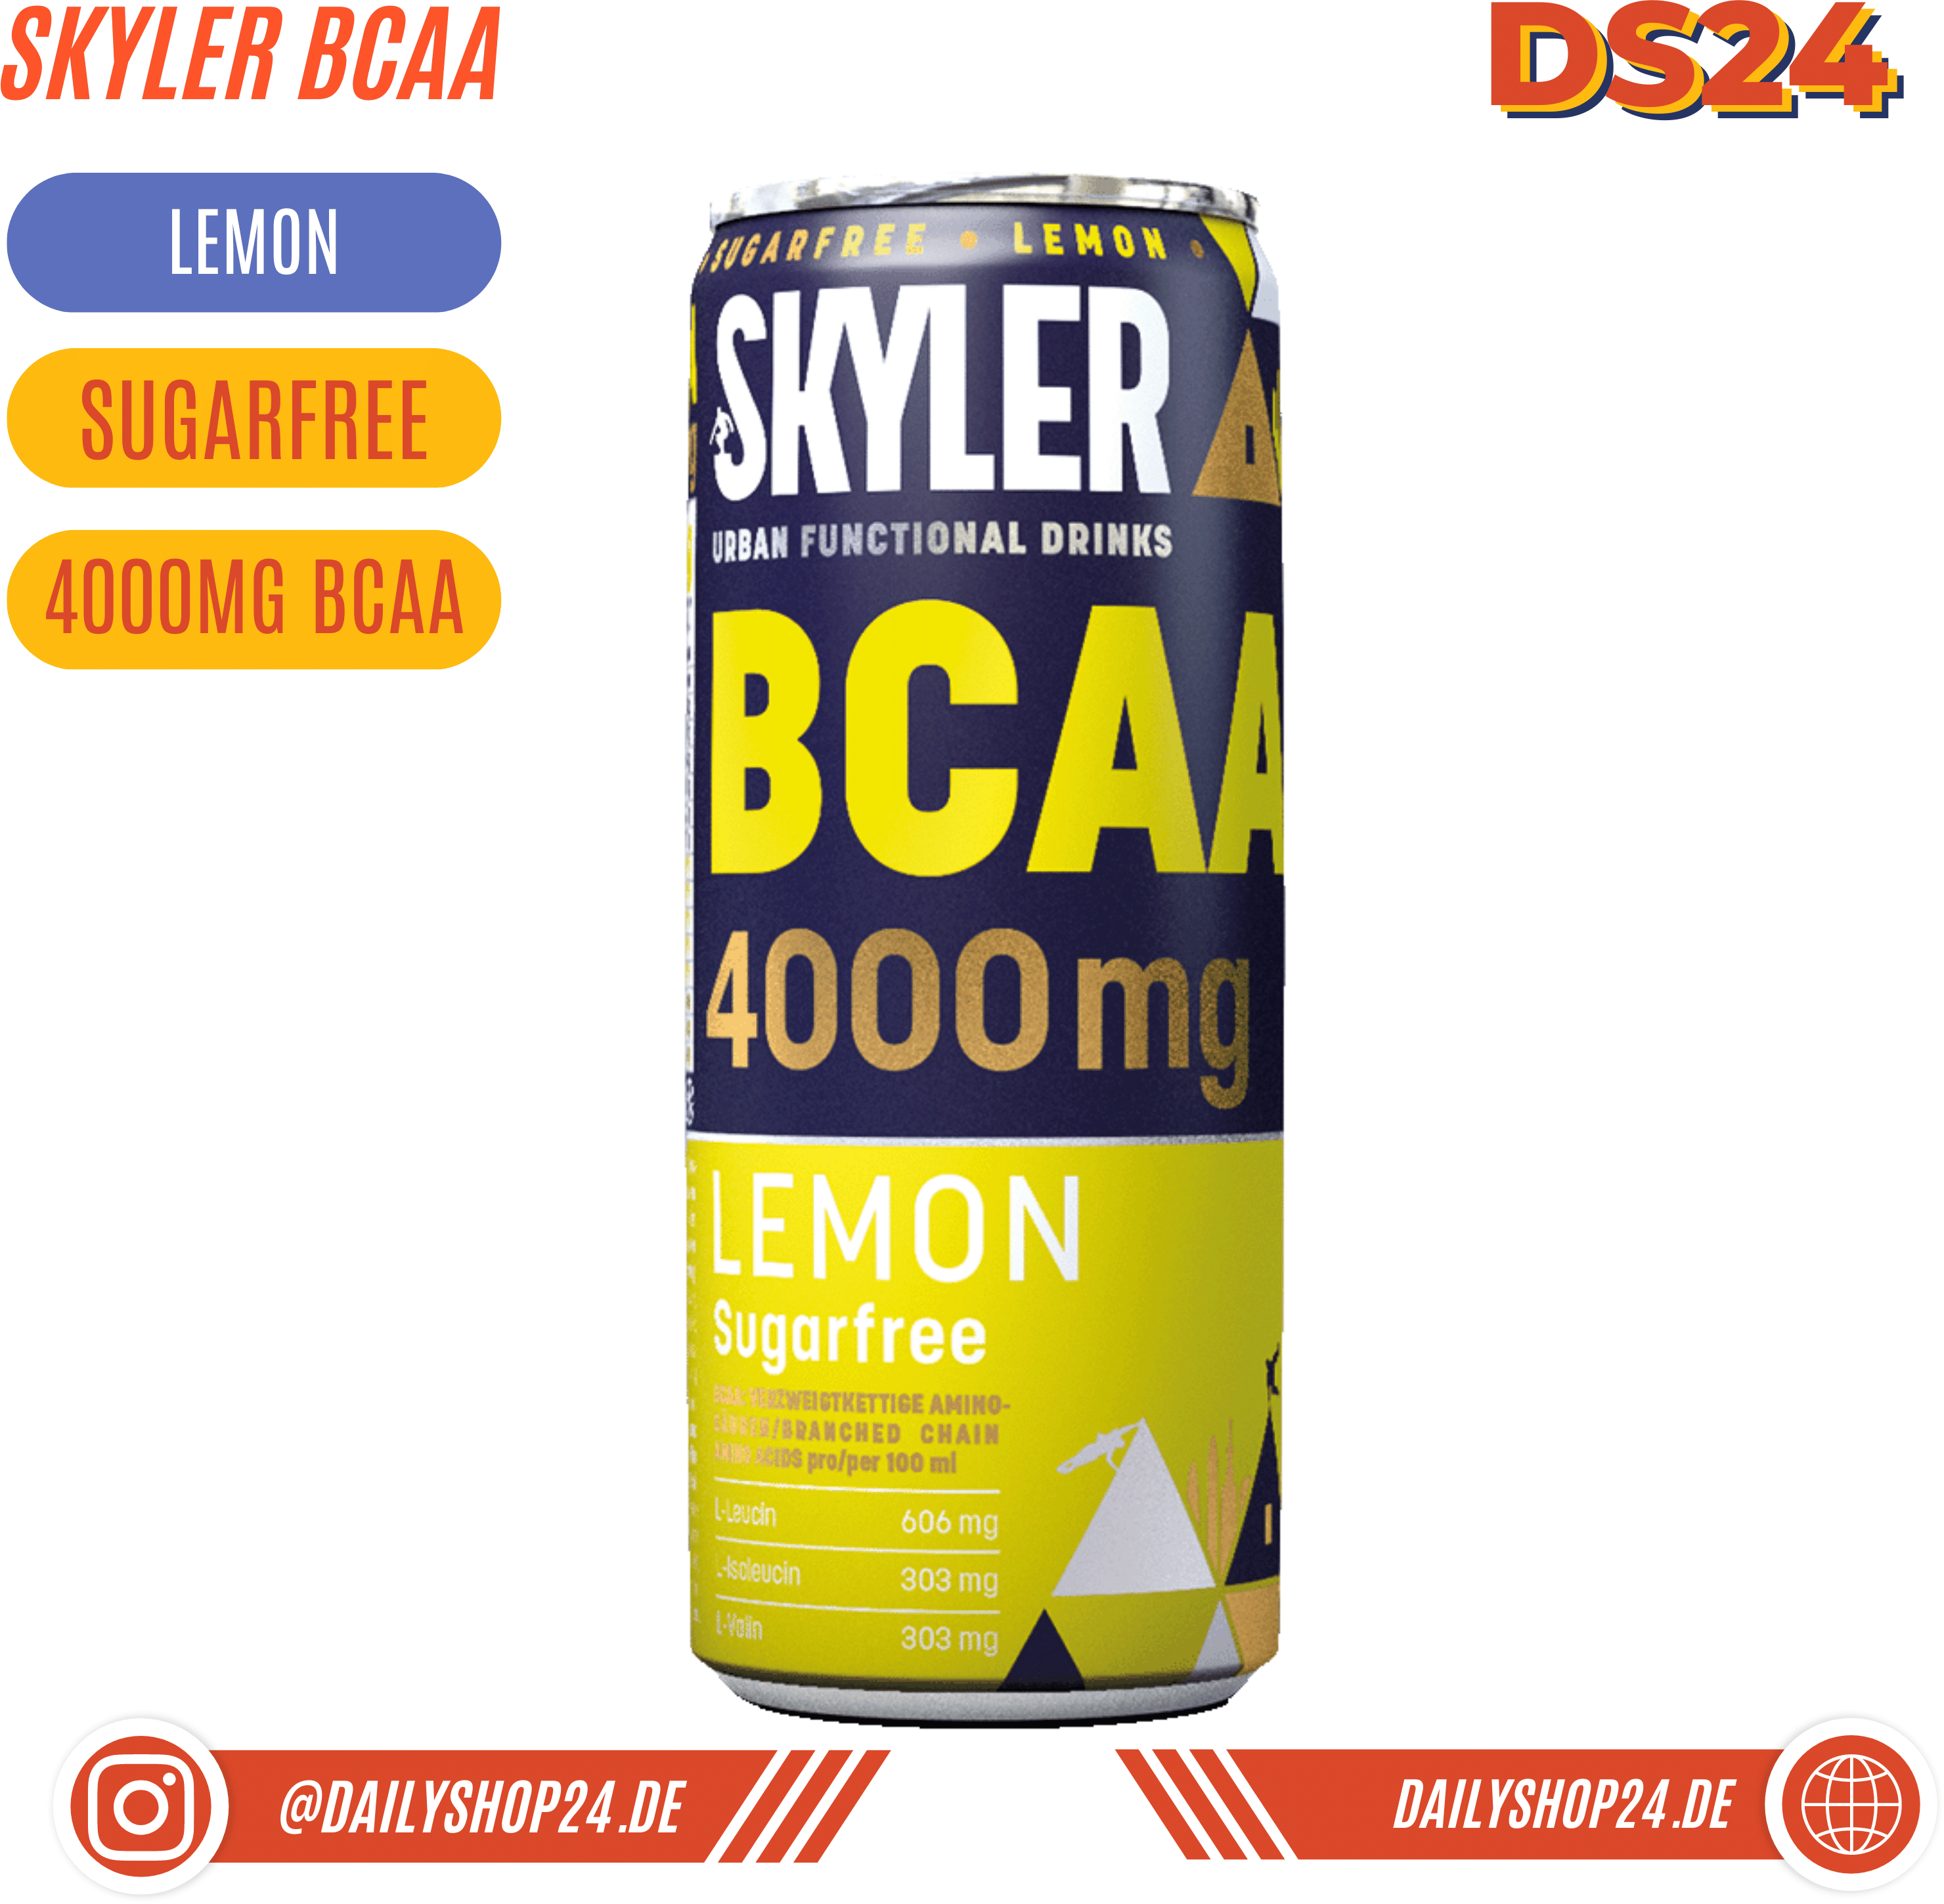 SKYLER BCAA Drink 330ml (zzgl. Pfand) - 1 Dosen / Lemon